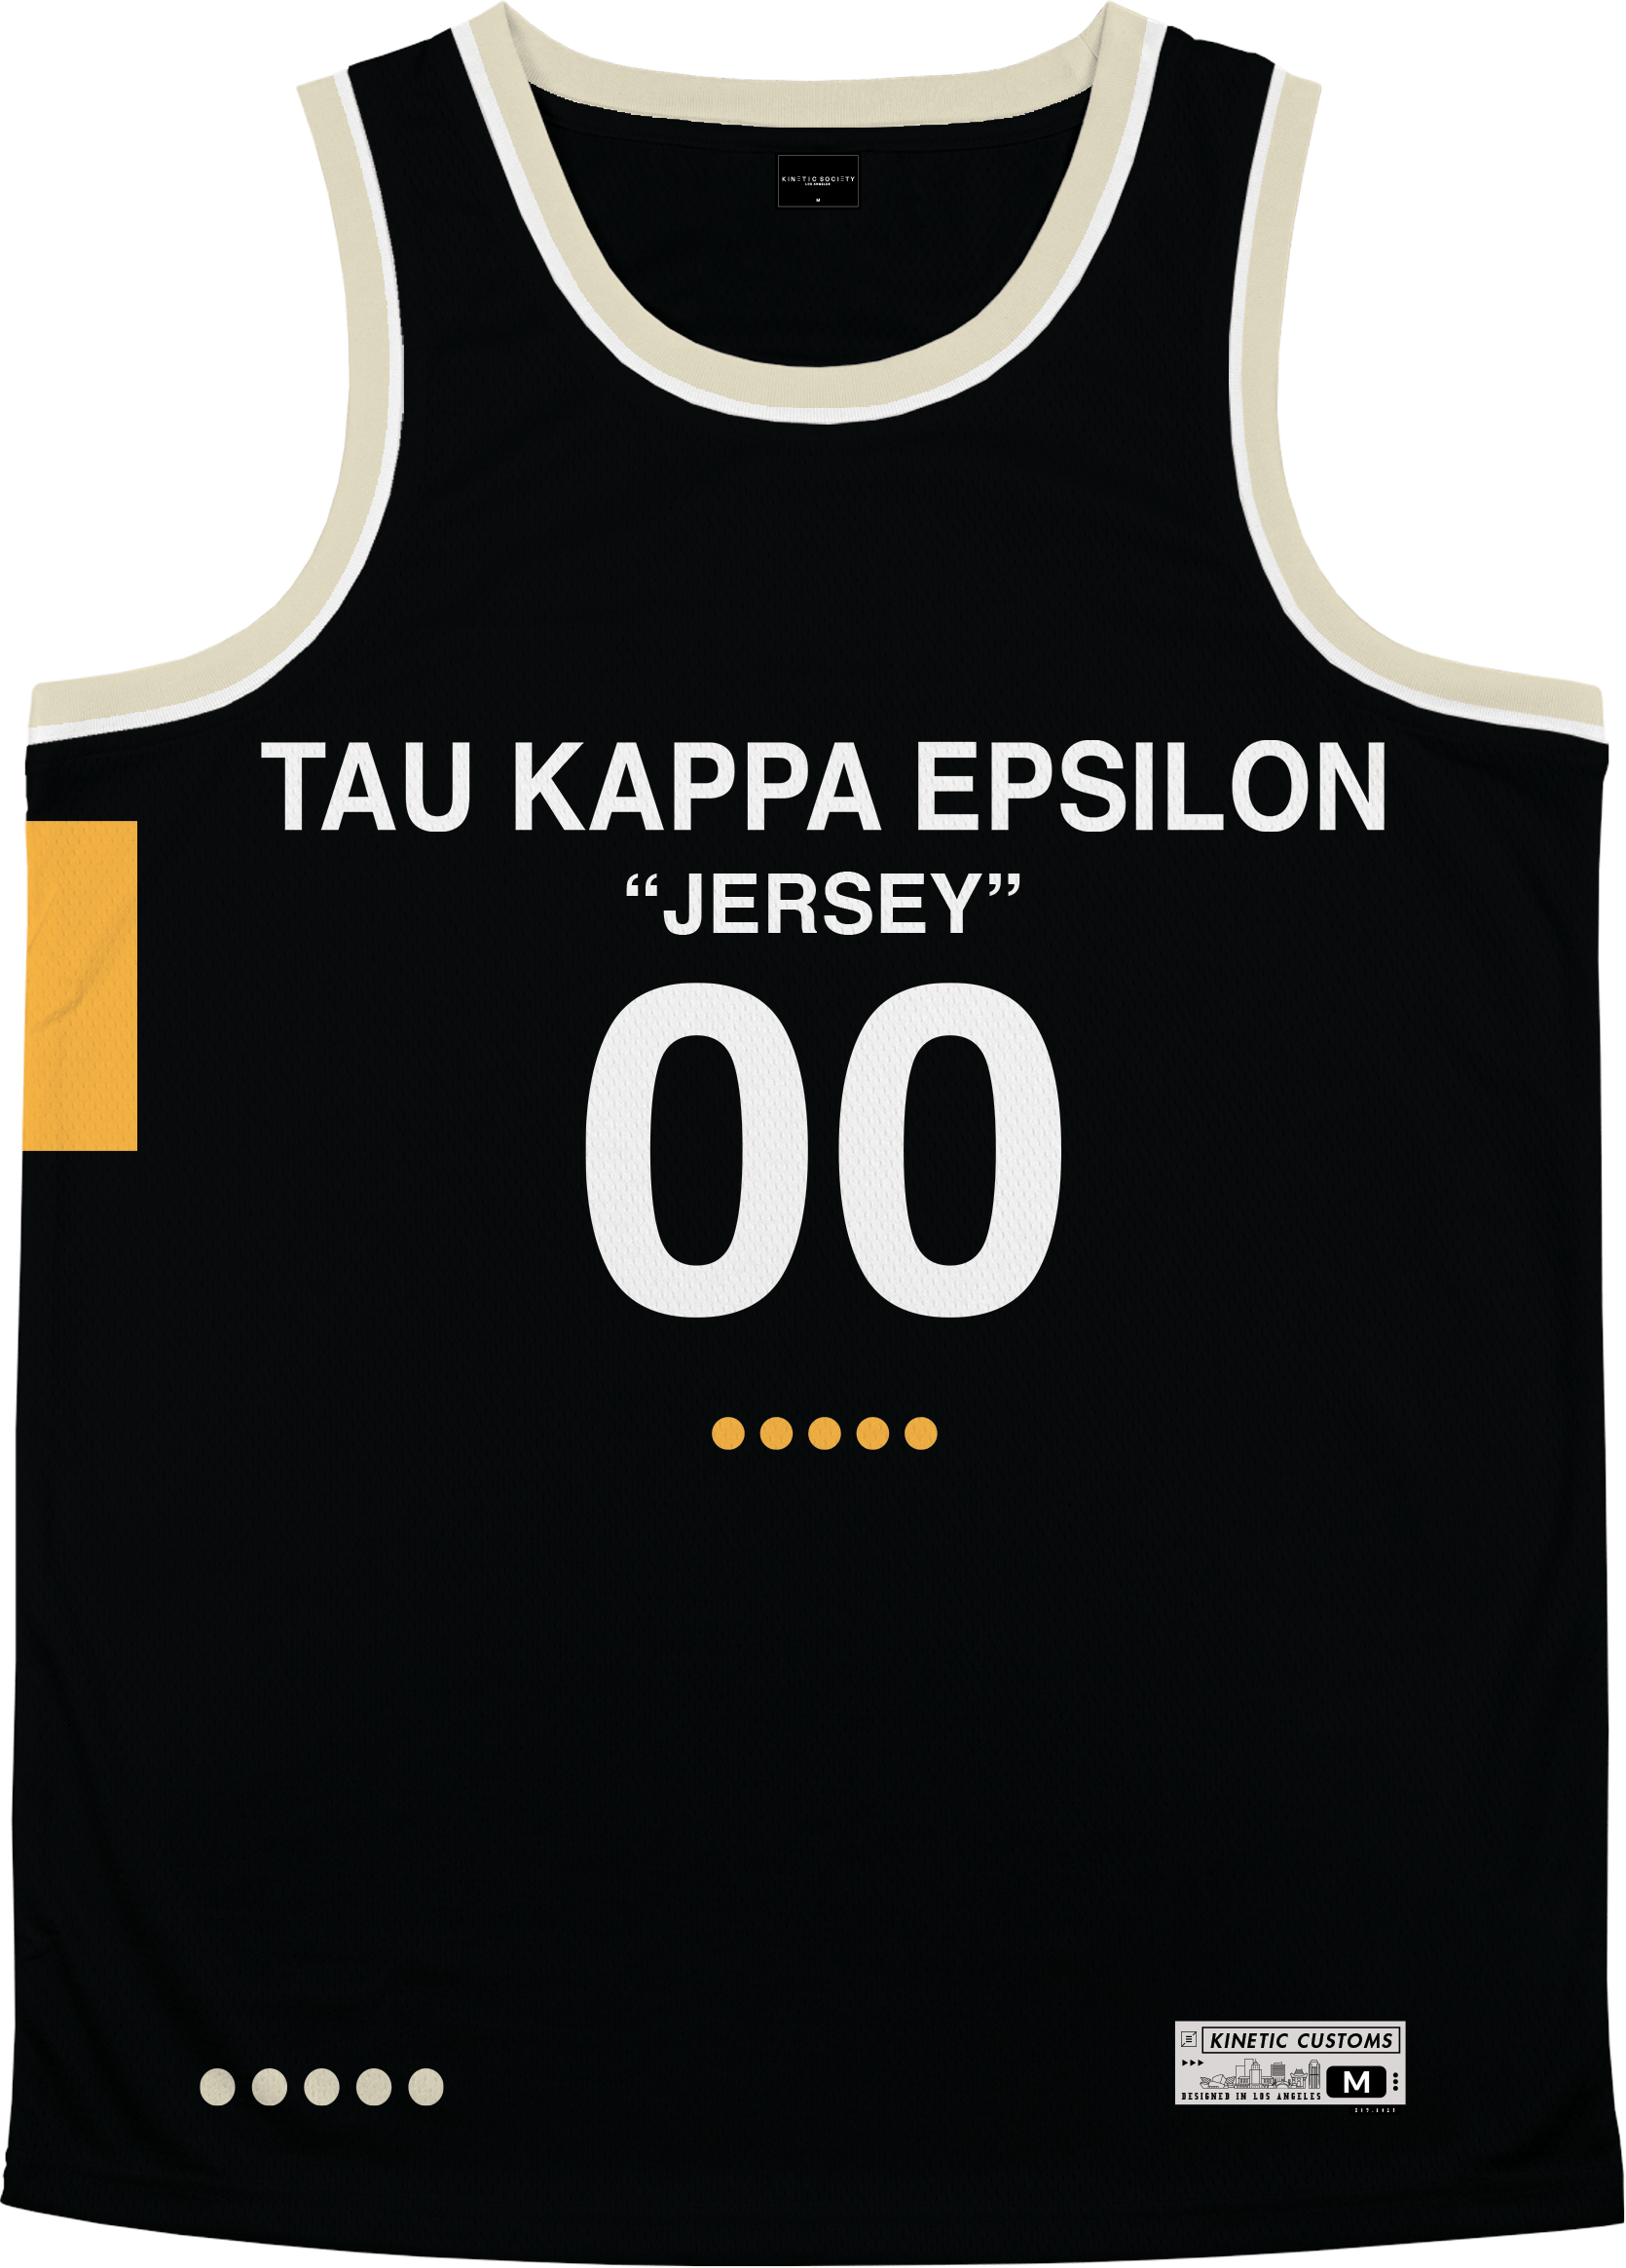 Tau Kappa Epsilon - OFF-MESH Basketball Jersey Premium Basketball Kinetic Society LLC 